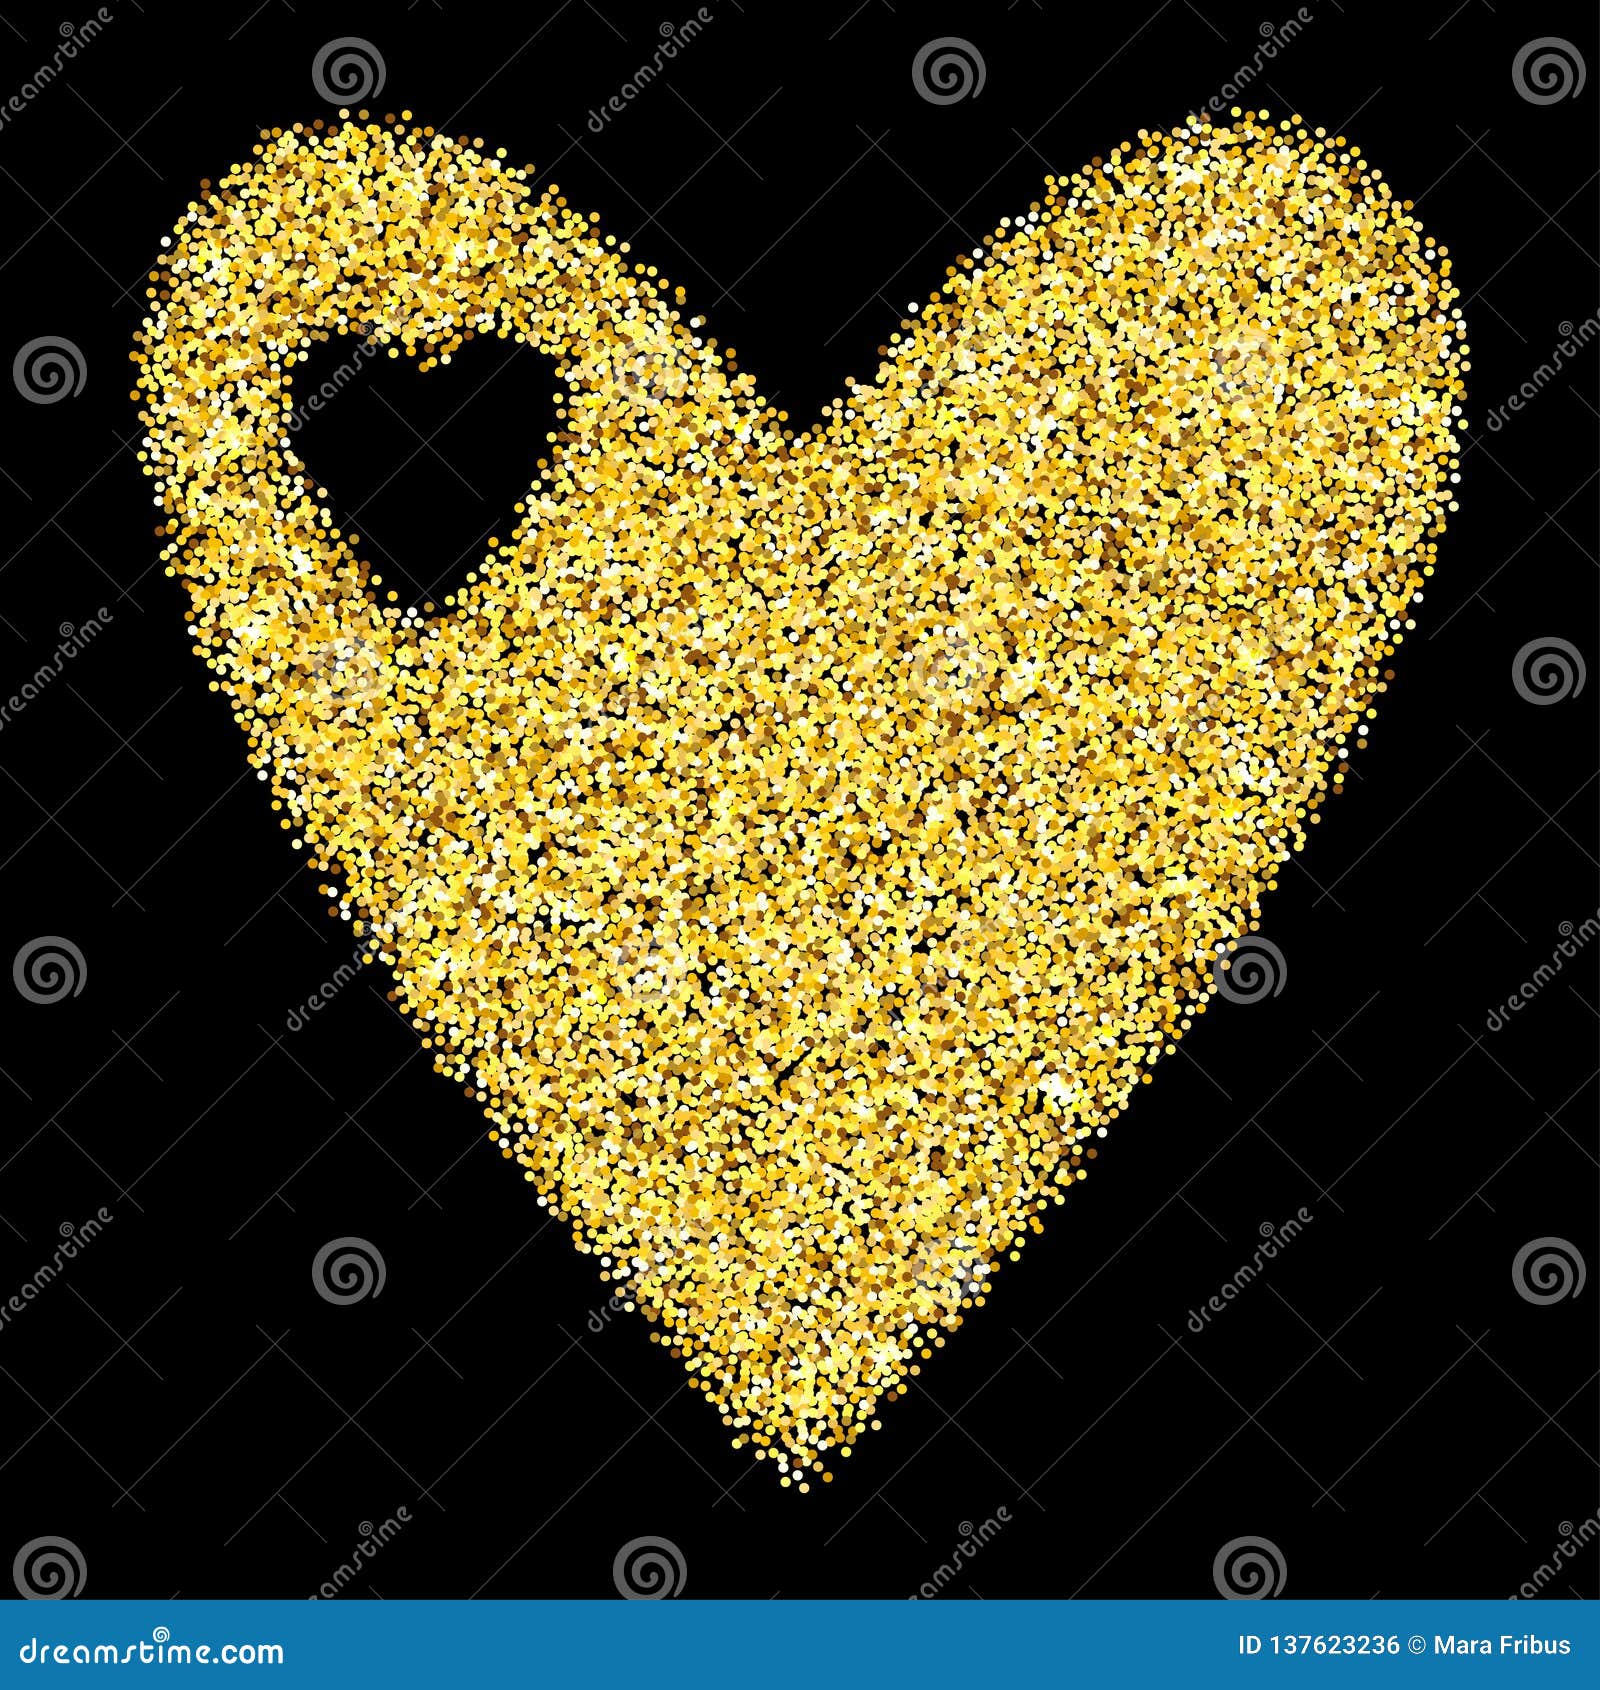 Gold Glitter Heart Stock Vector Illustration Of Isolated 137623236